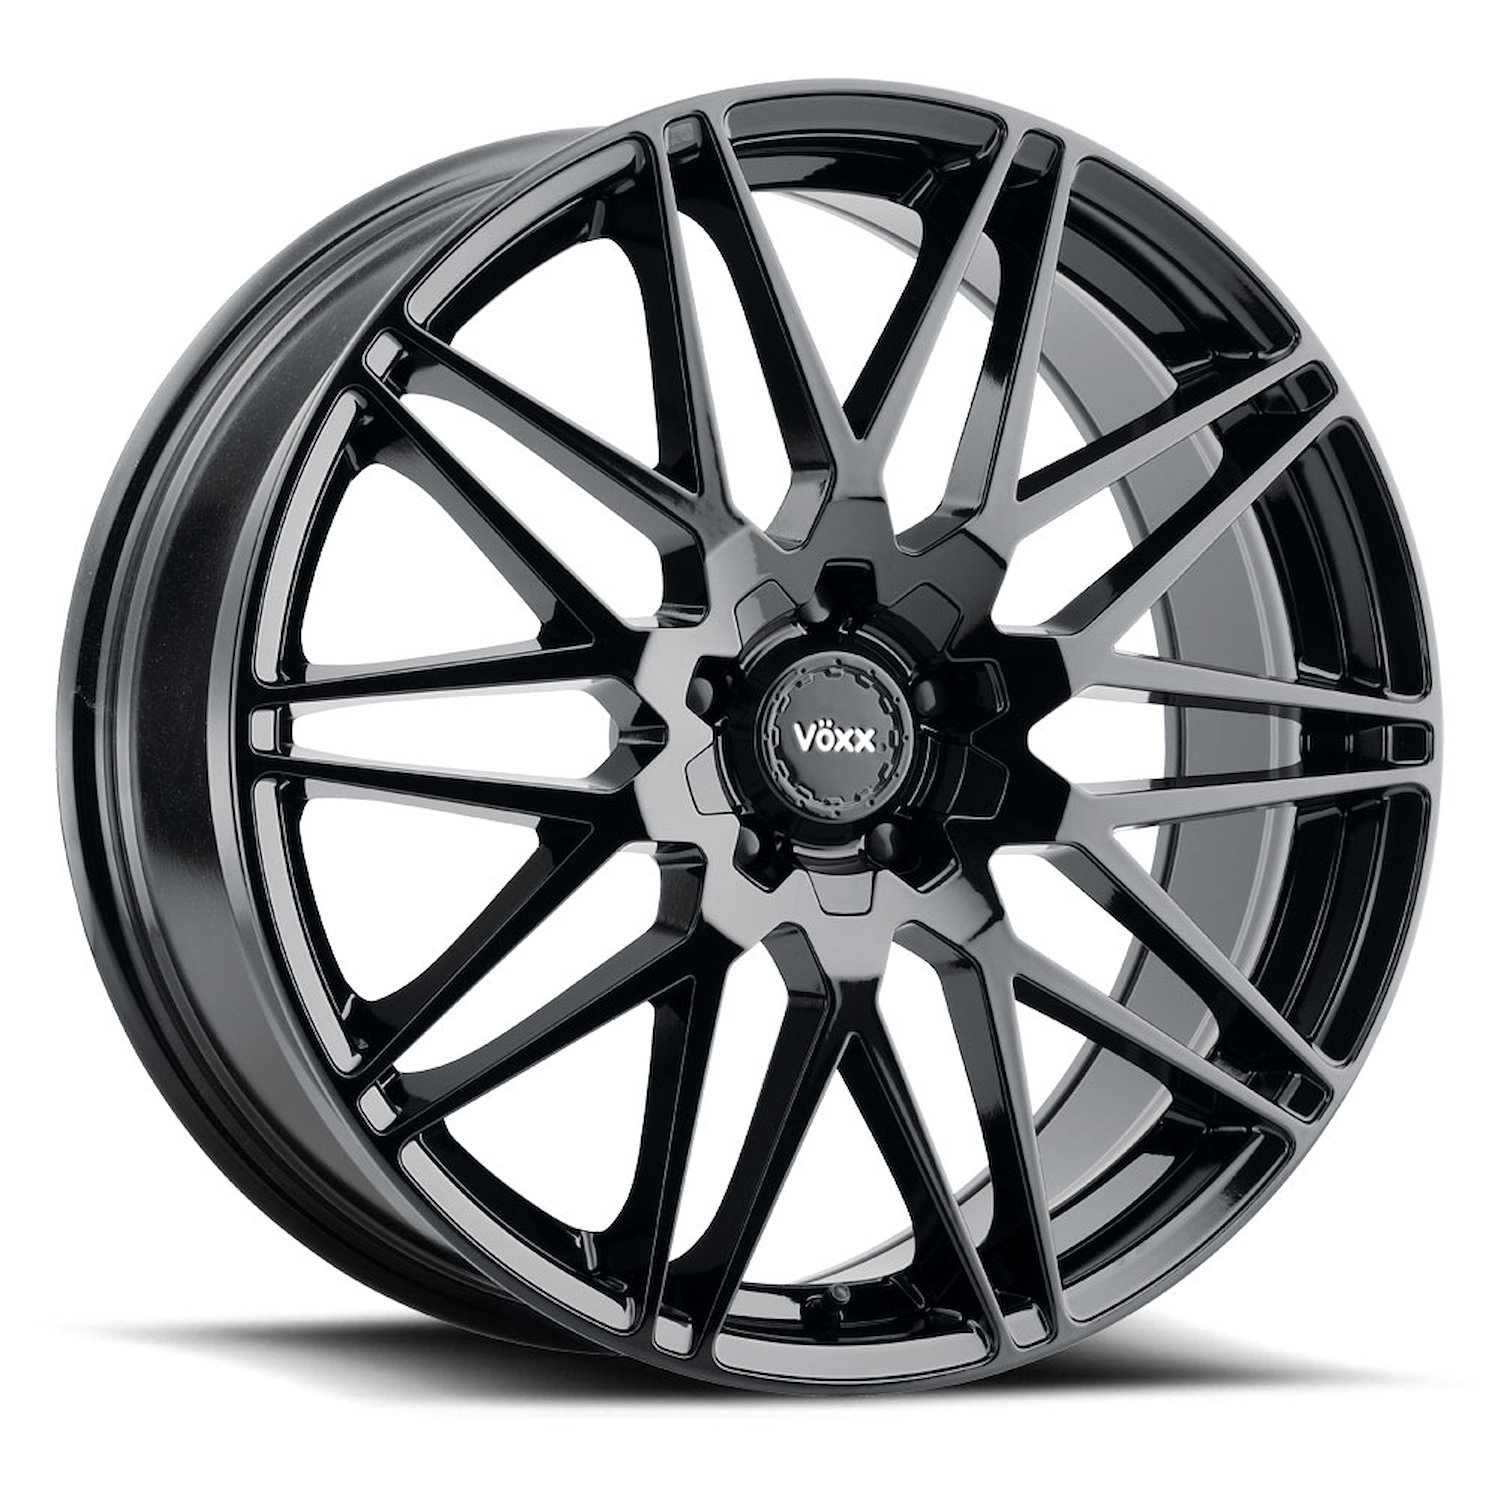 NCE 285-5008-40 GB Nice Wheel [Size: 20" x 8.50"] Finish: Gloss Black